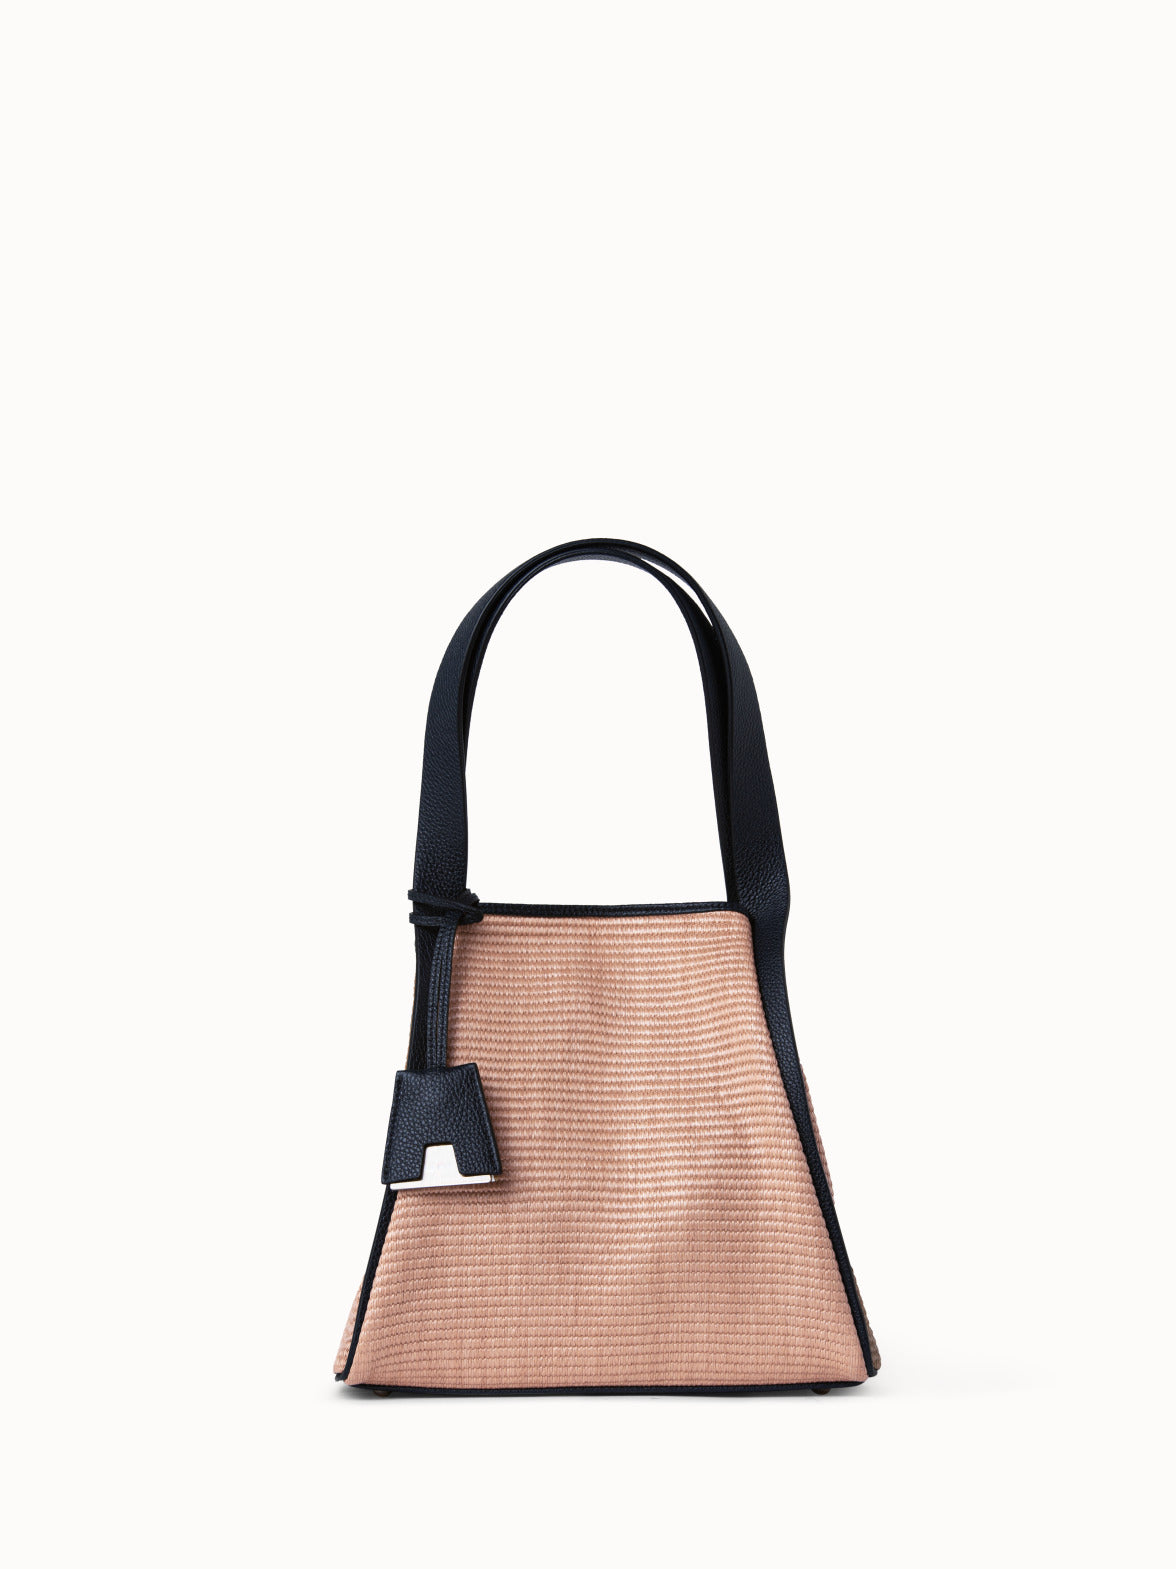 Fendi By The Way Mini Raffia & Leather Shoulder Bag in Metallic